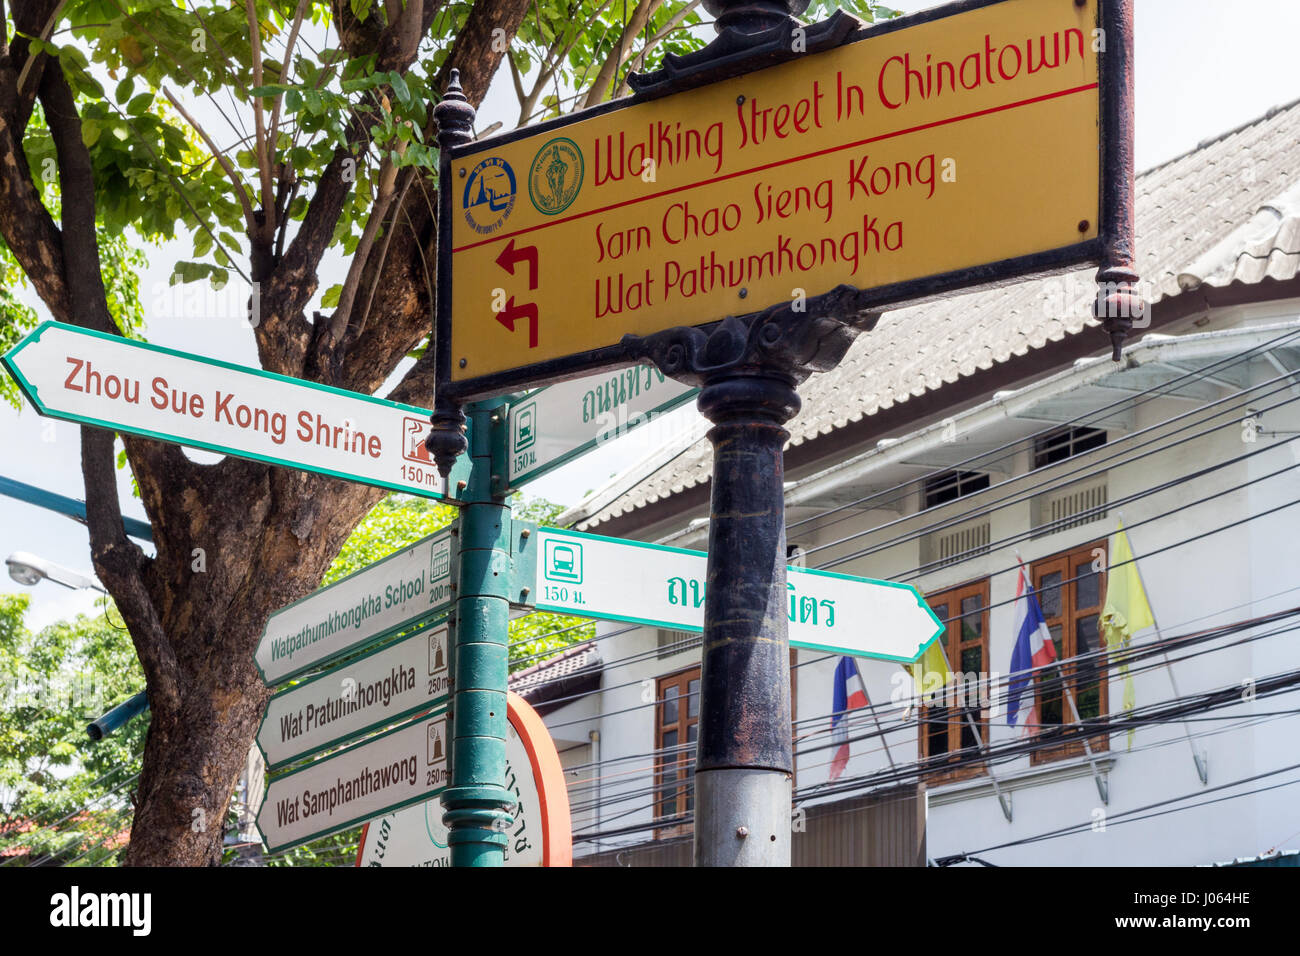 Tourist signs in Chinatown, Bangkok, Thailand Stock Photo